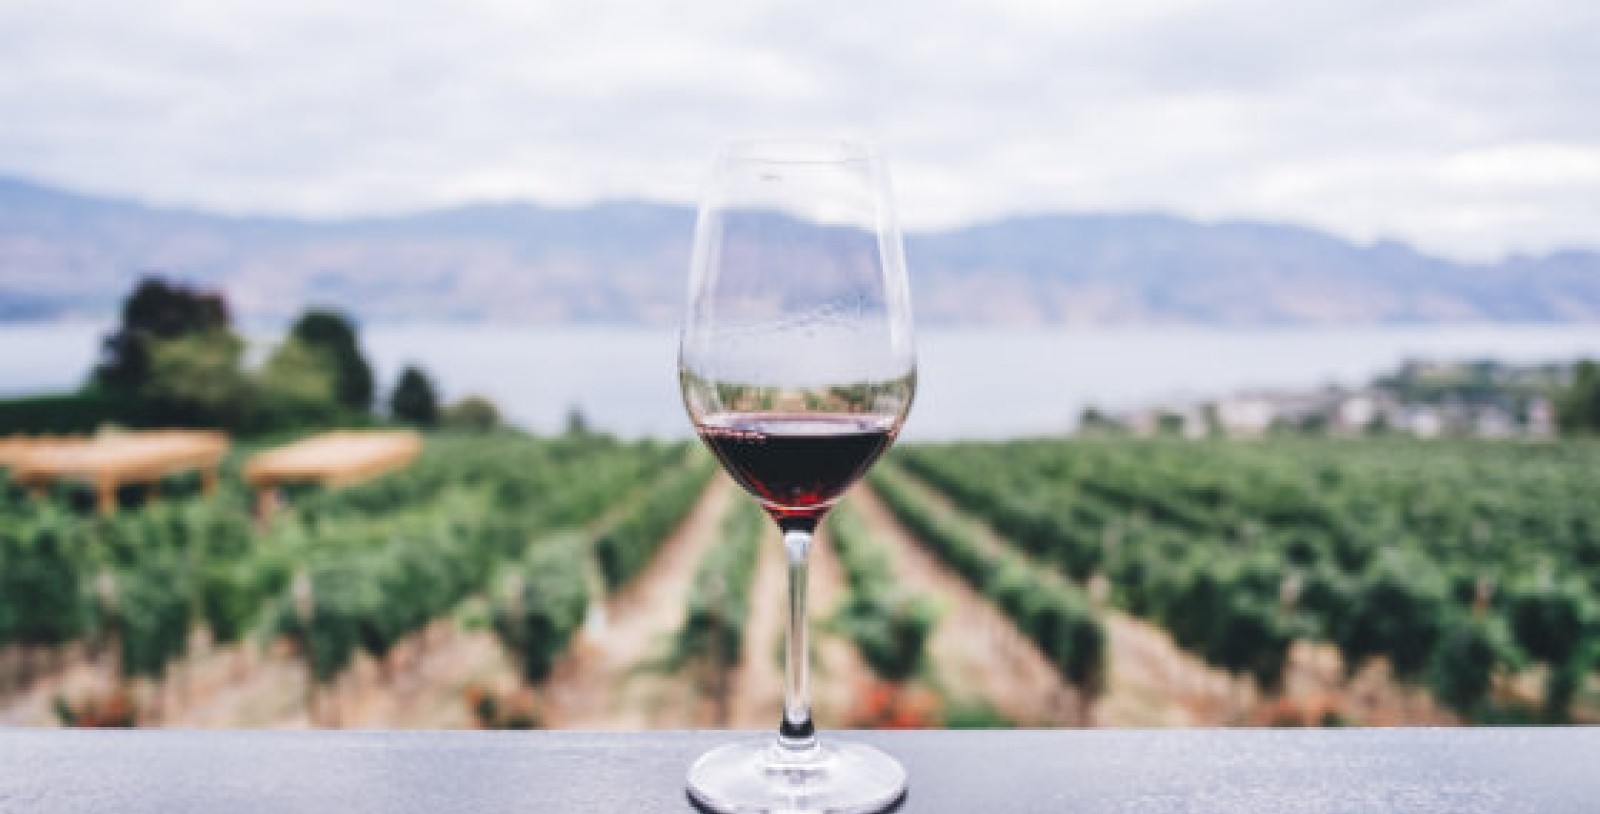 Explore Napa's wine country on the historic Napa Valley Wine Train.